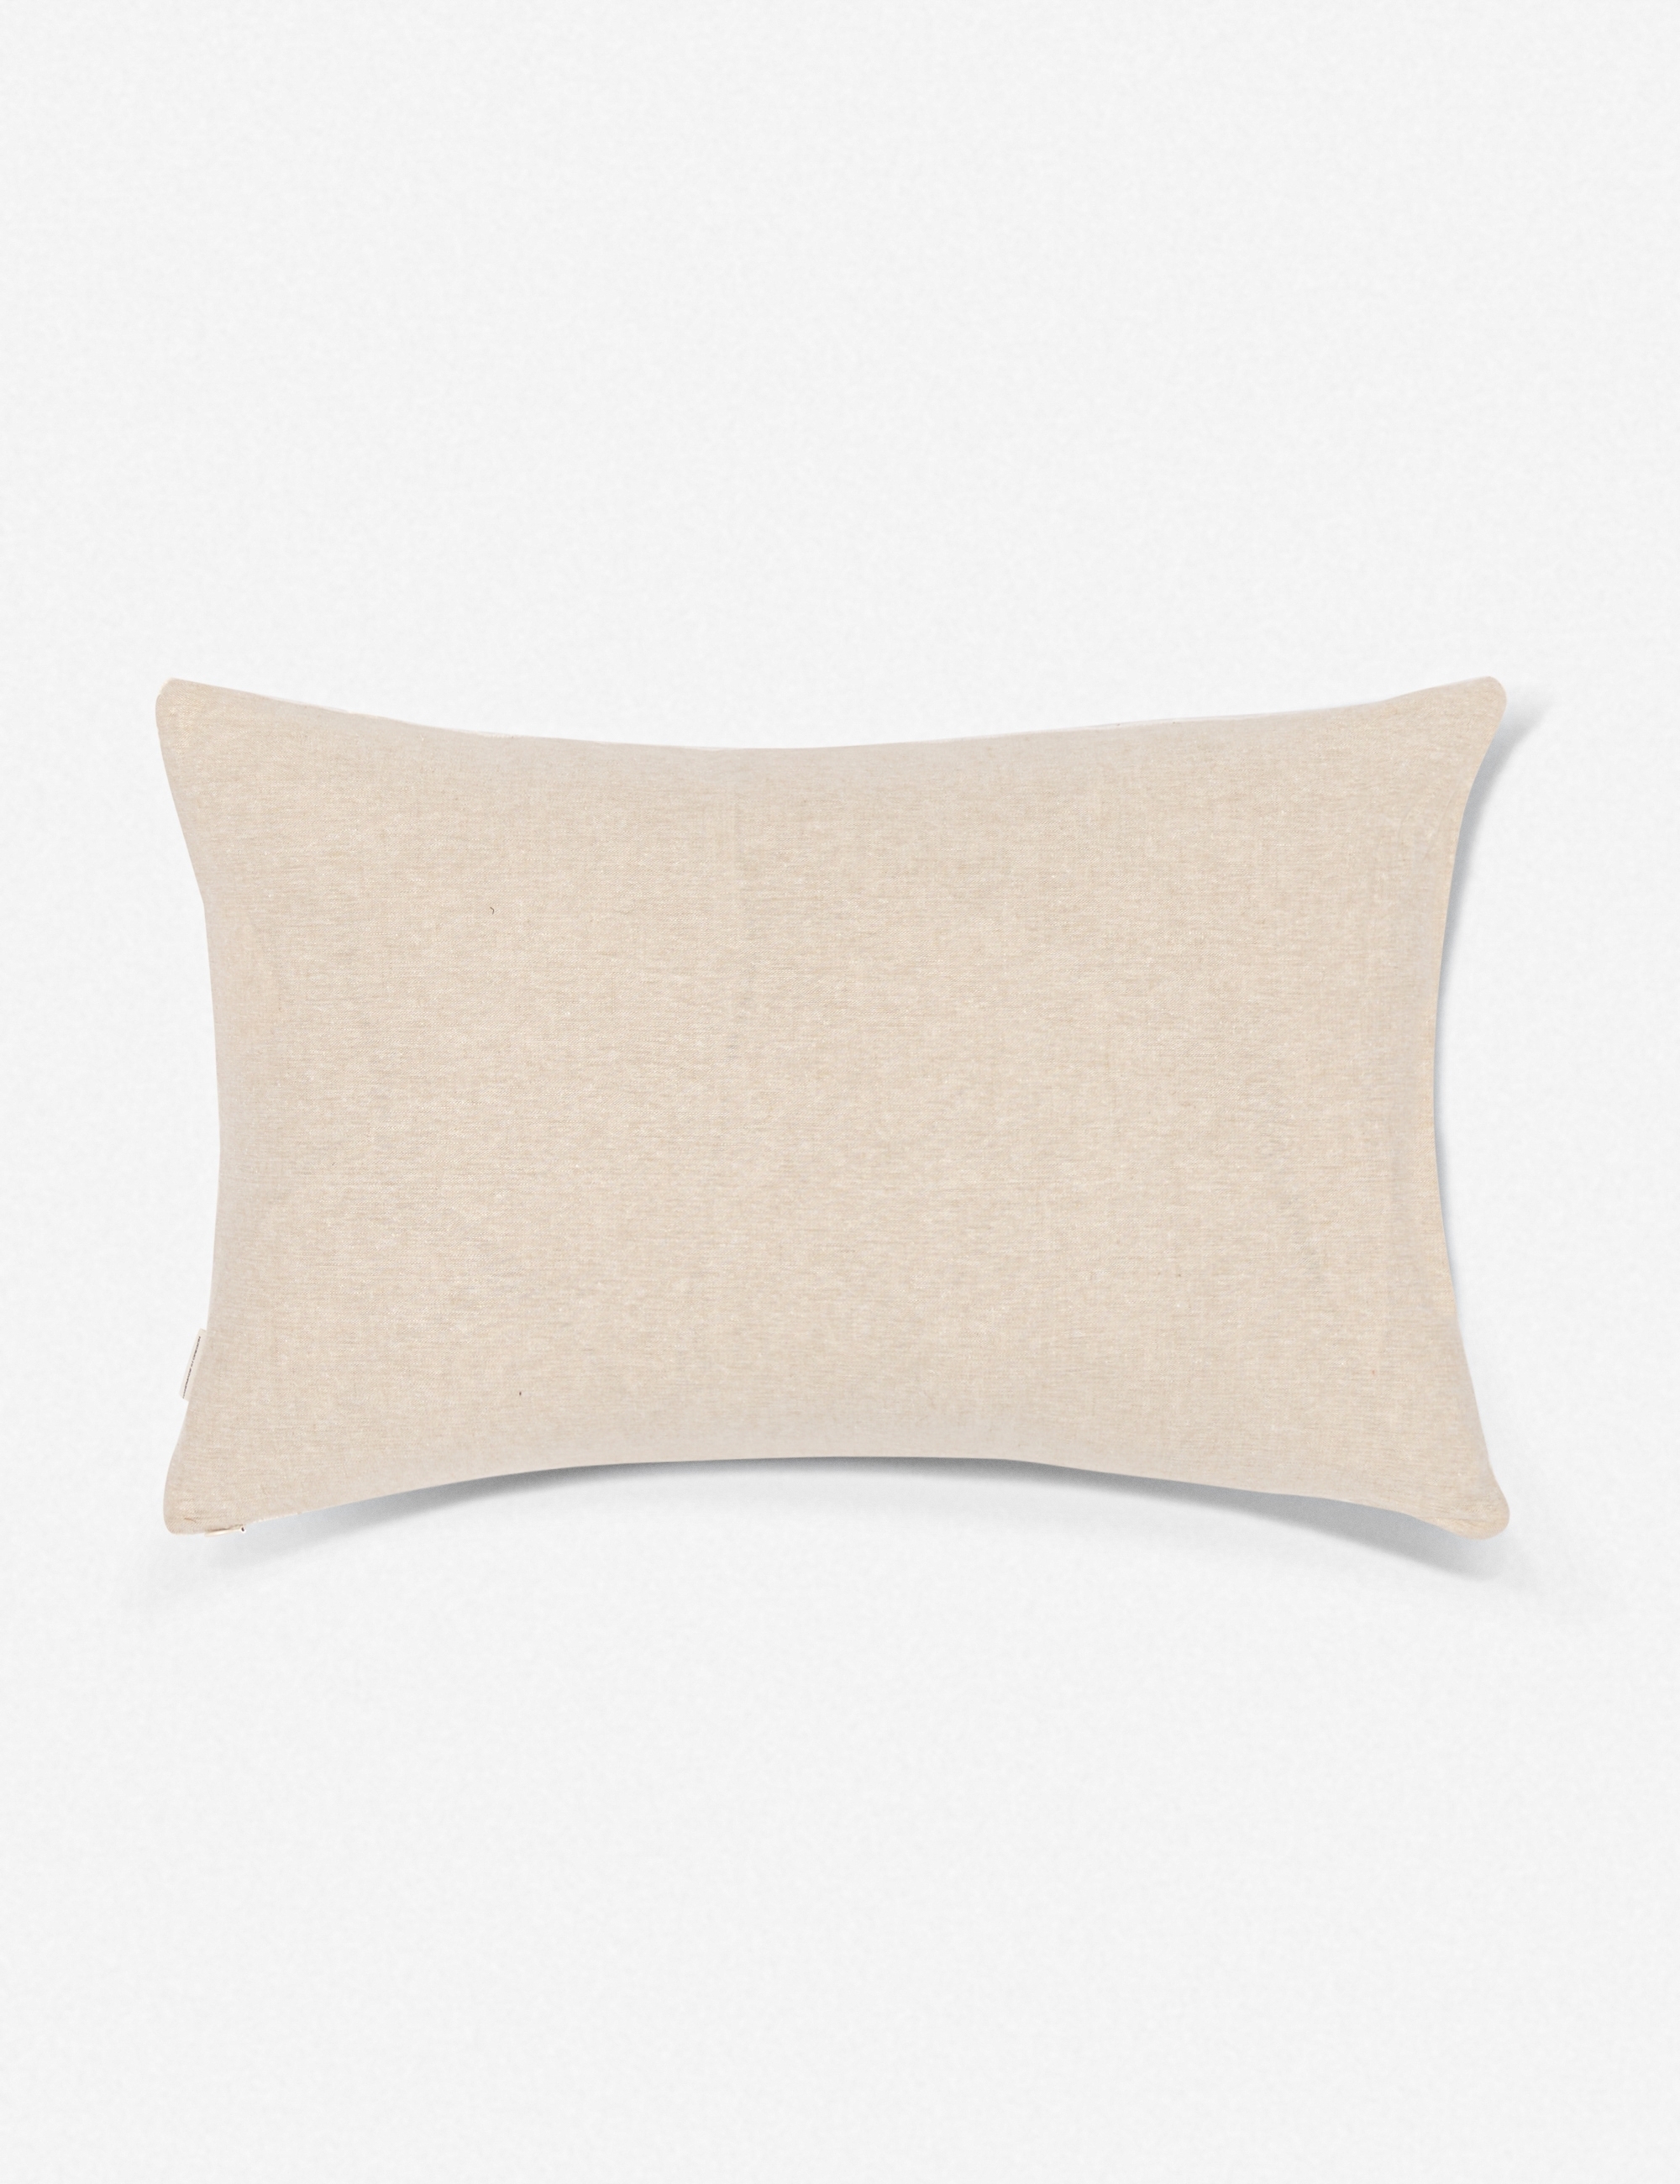 Norala One Of A Kind Mudcloth Lumbar Pillow - Image 1